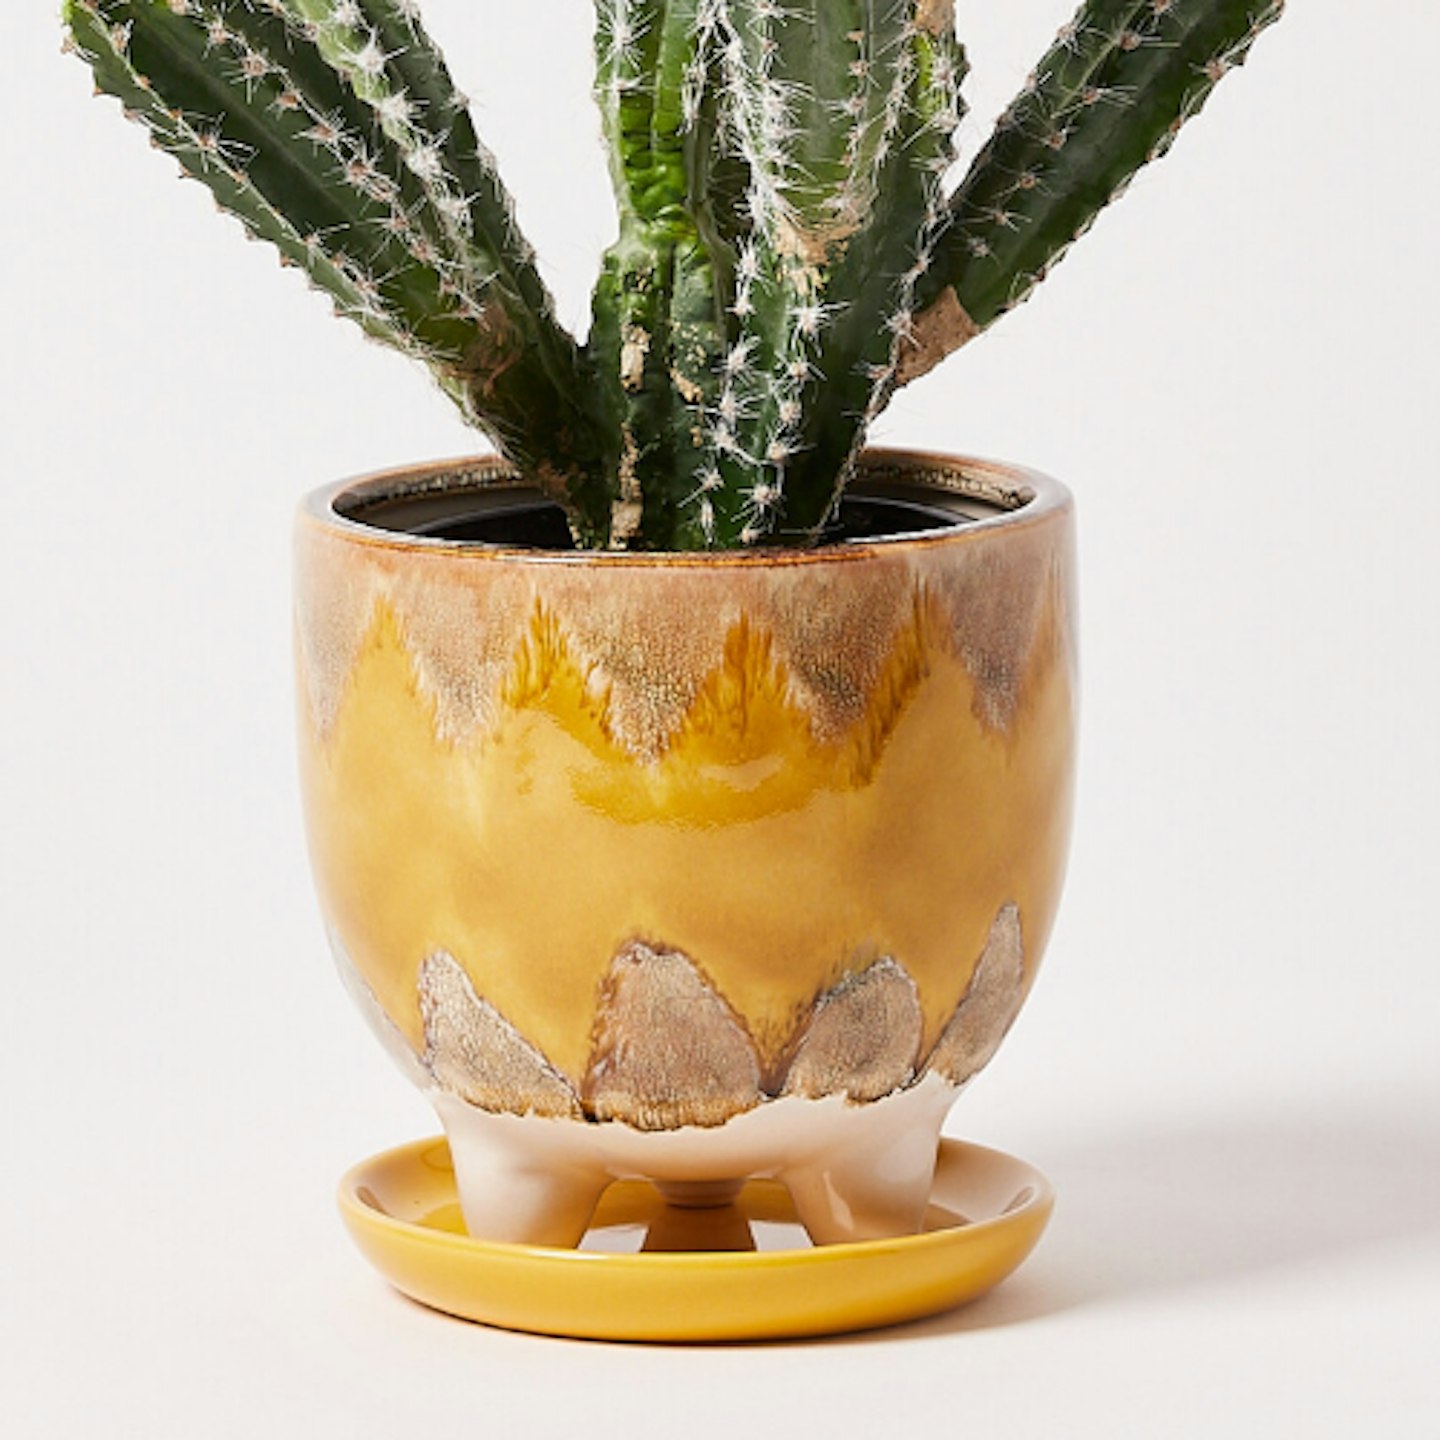 Oliver Bonas, Ulu Yellow Ceramic Saucer & Plant Pot, £22.50